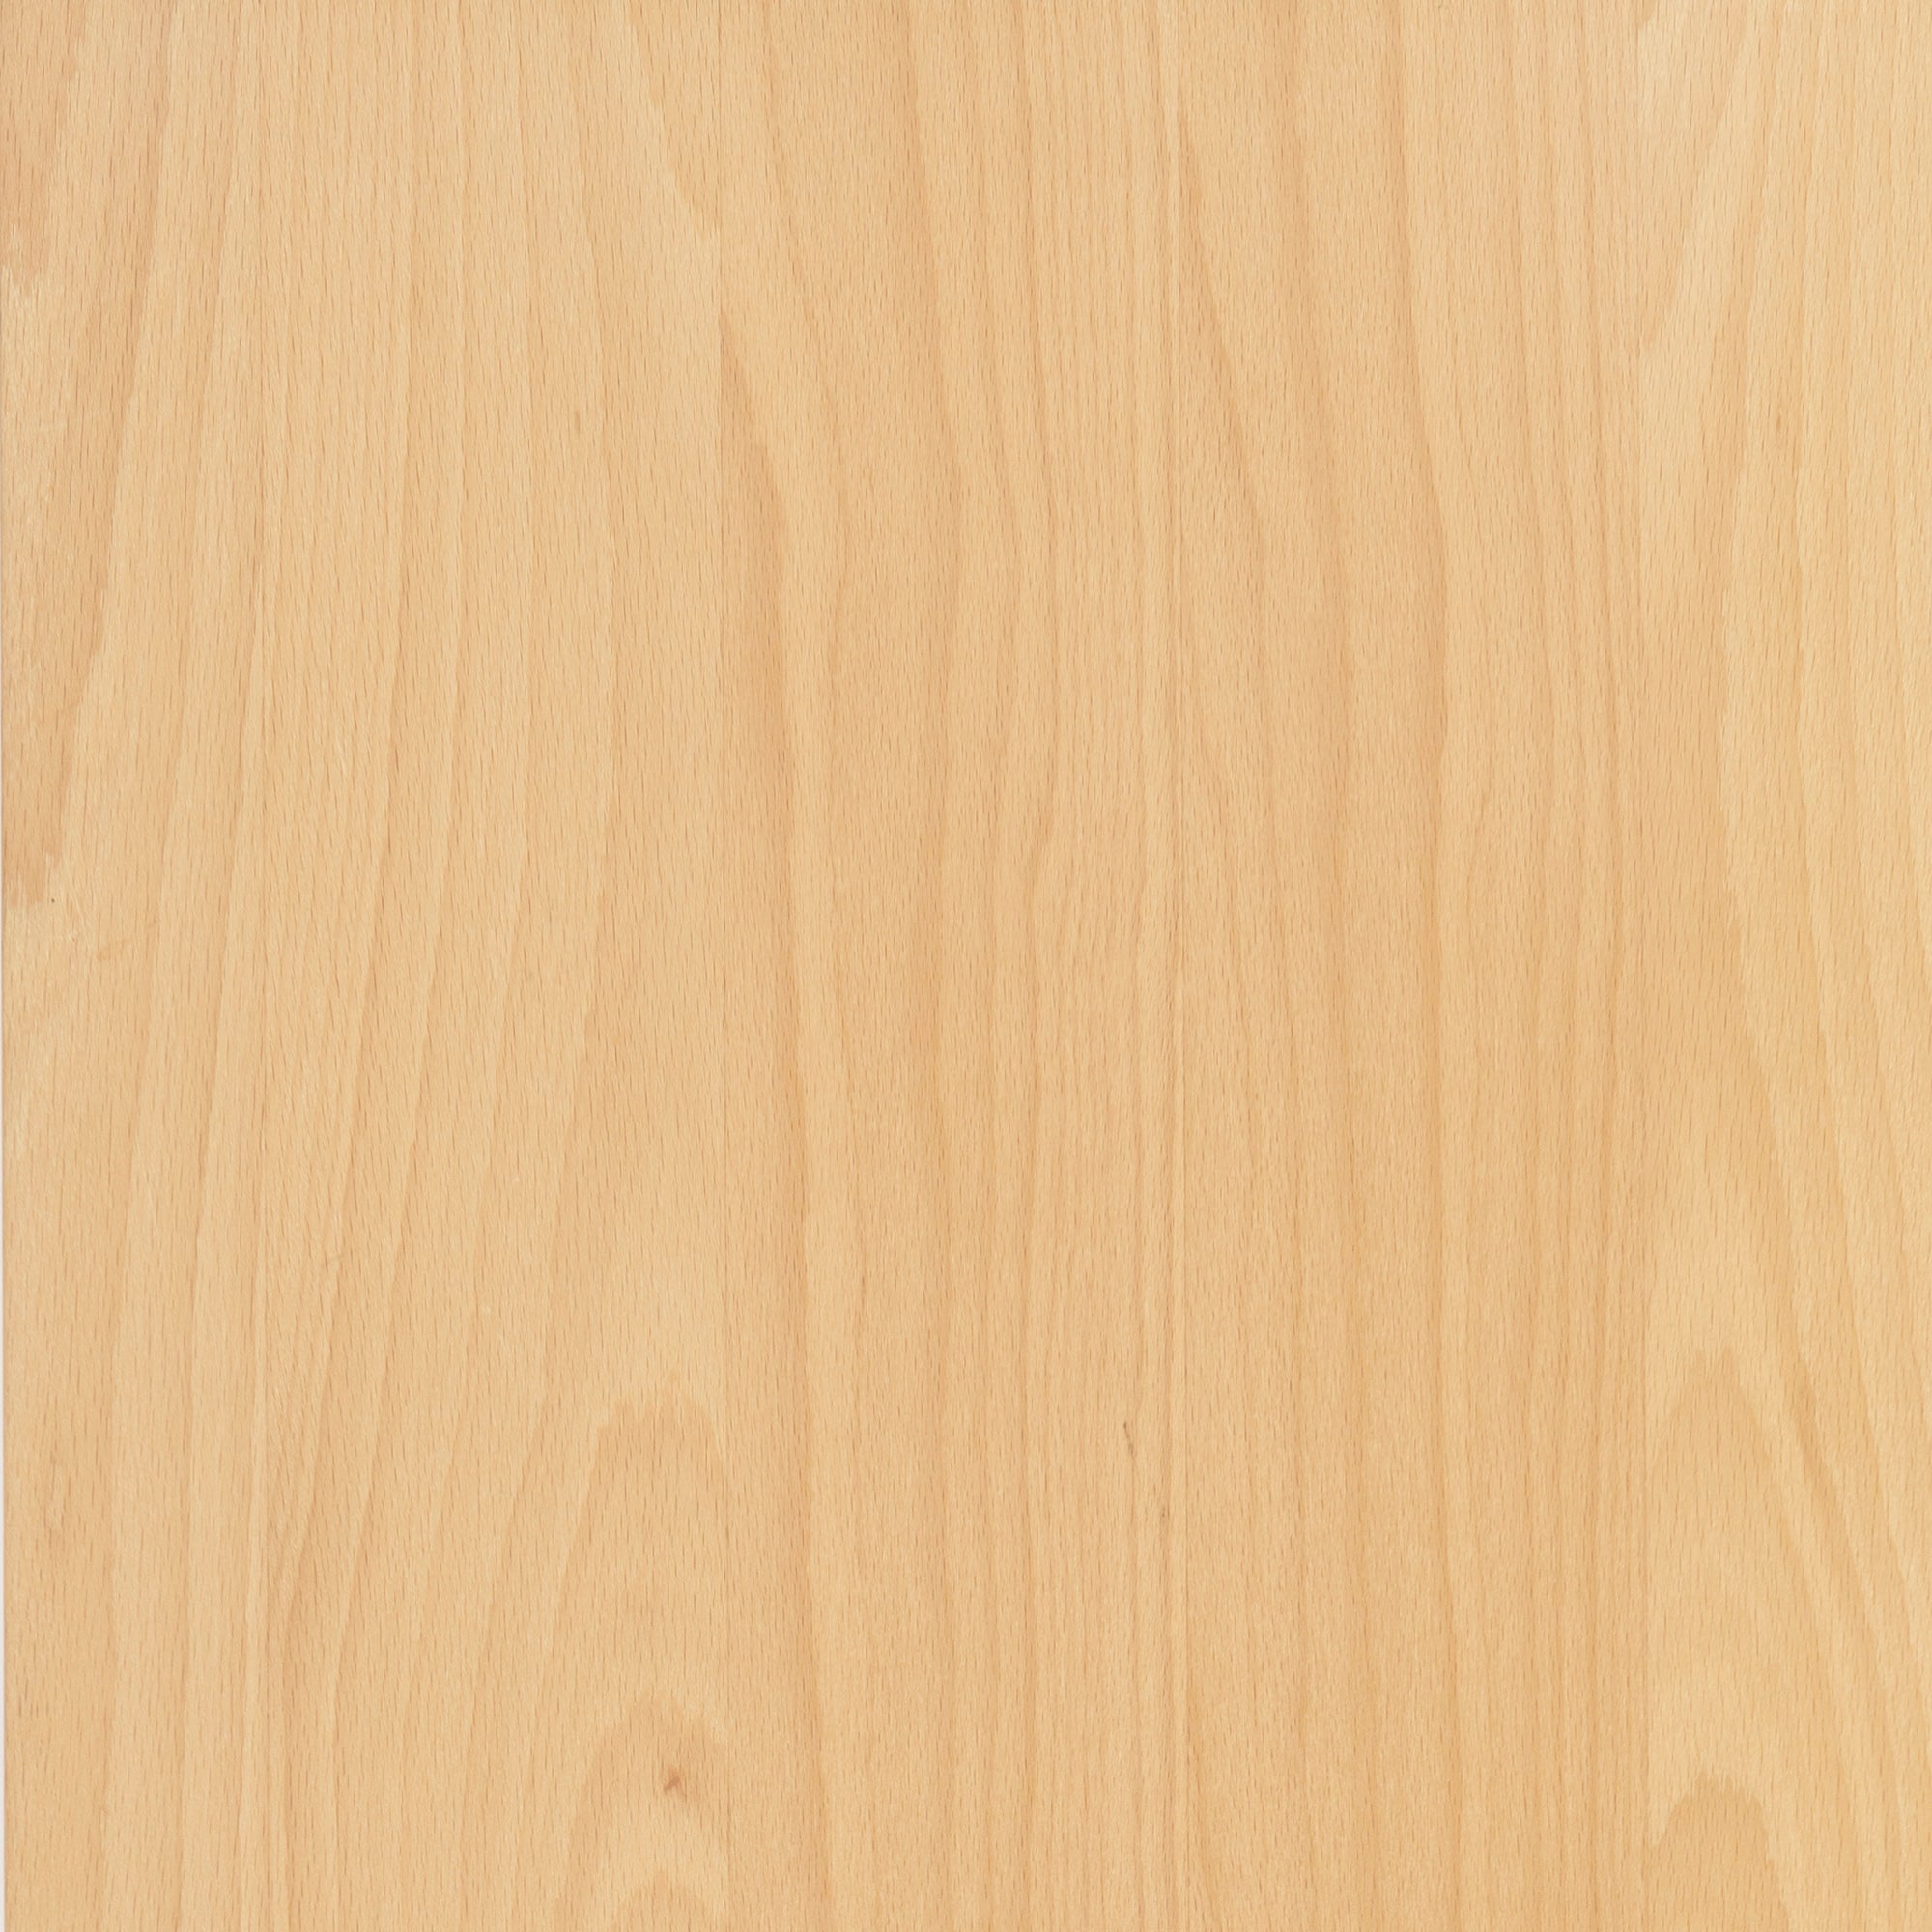 Houtmerk -  Massief houten werkblad op maat - Beuken Gestoomd doorgaande lamel Werkbladen Houtmerk   